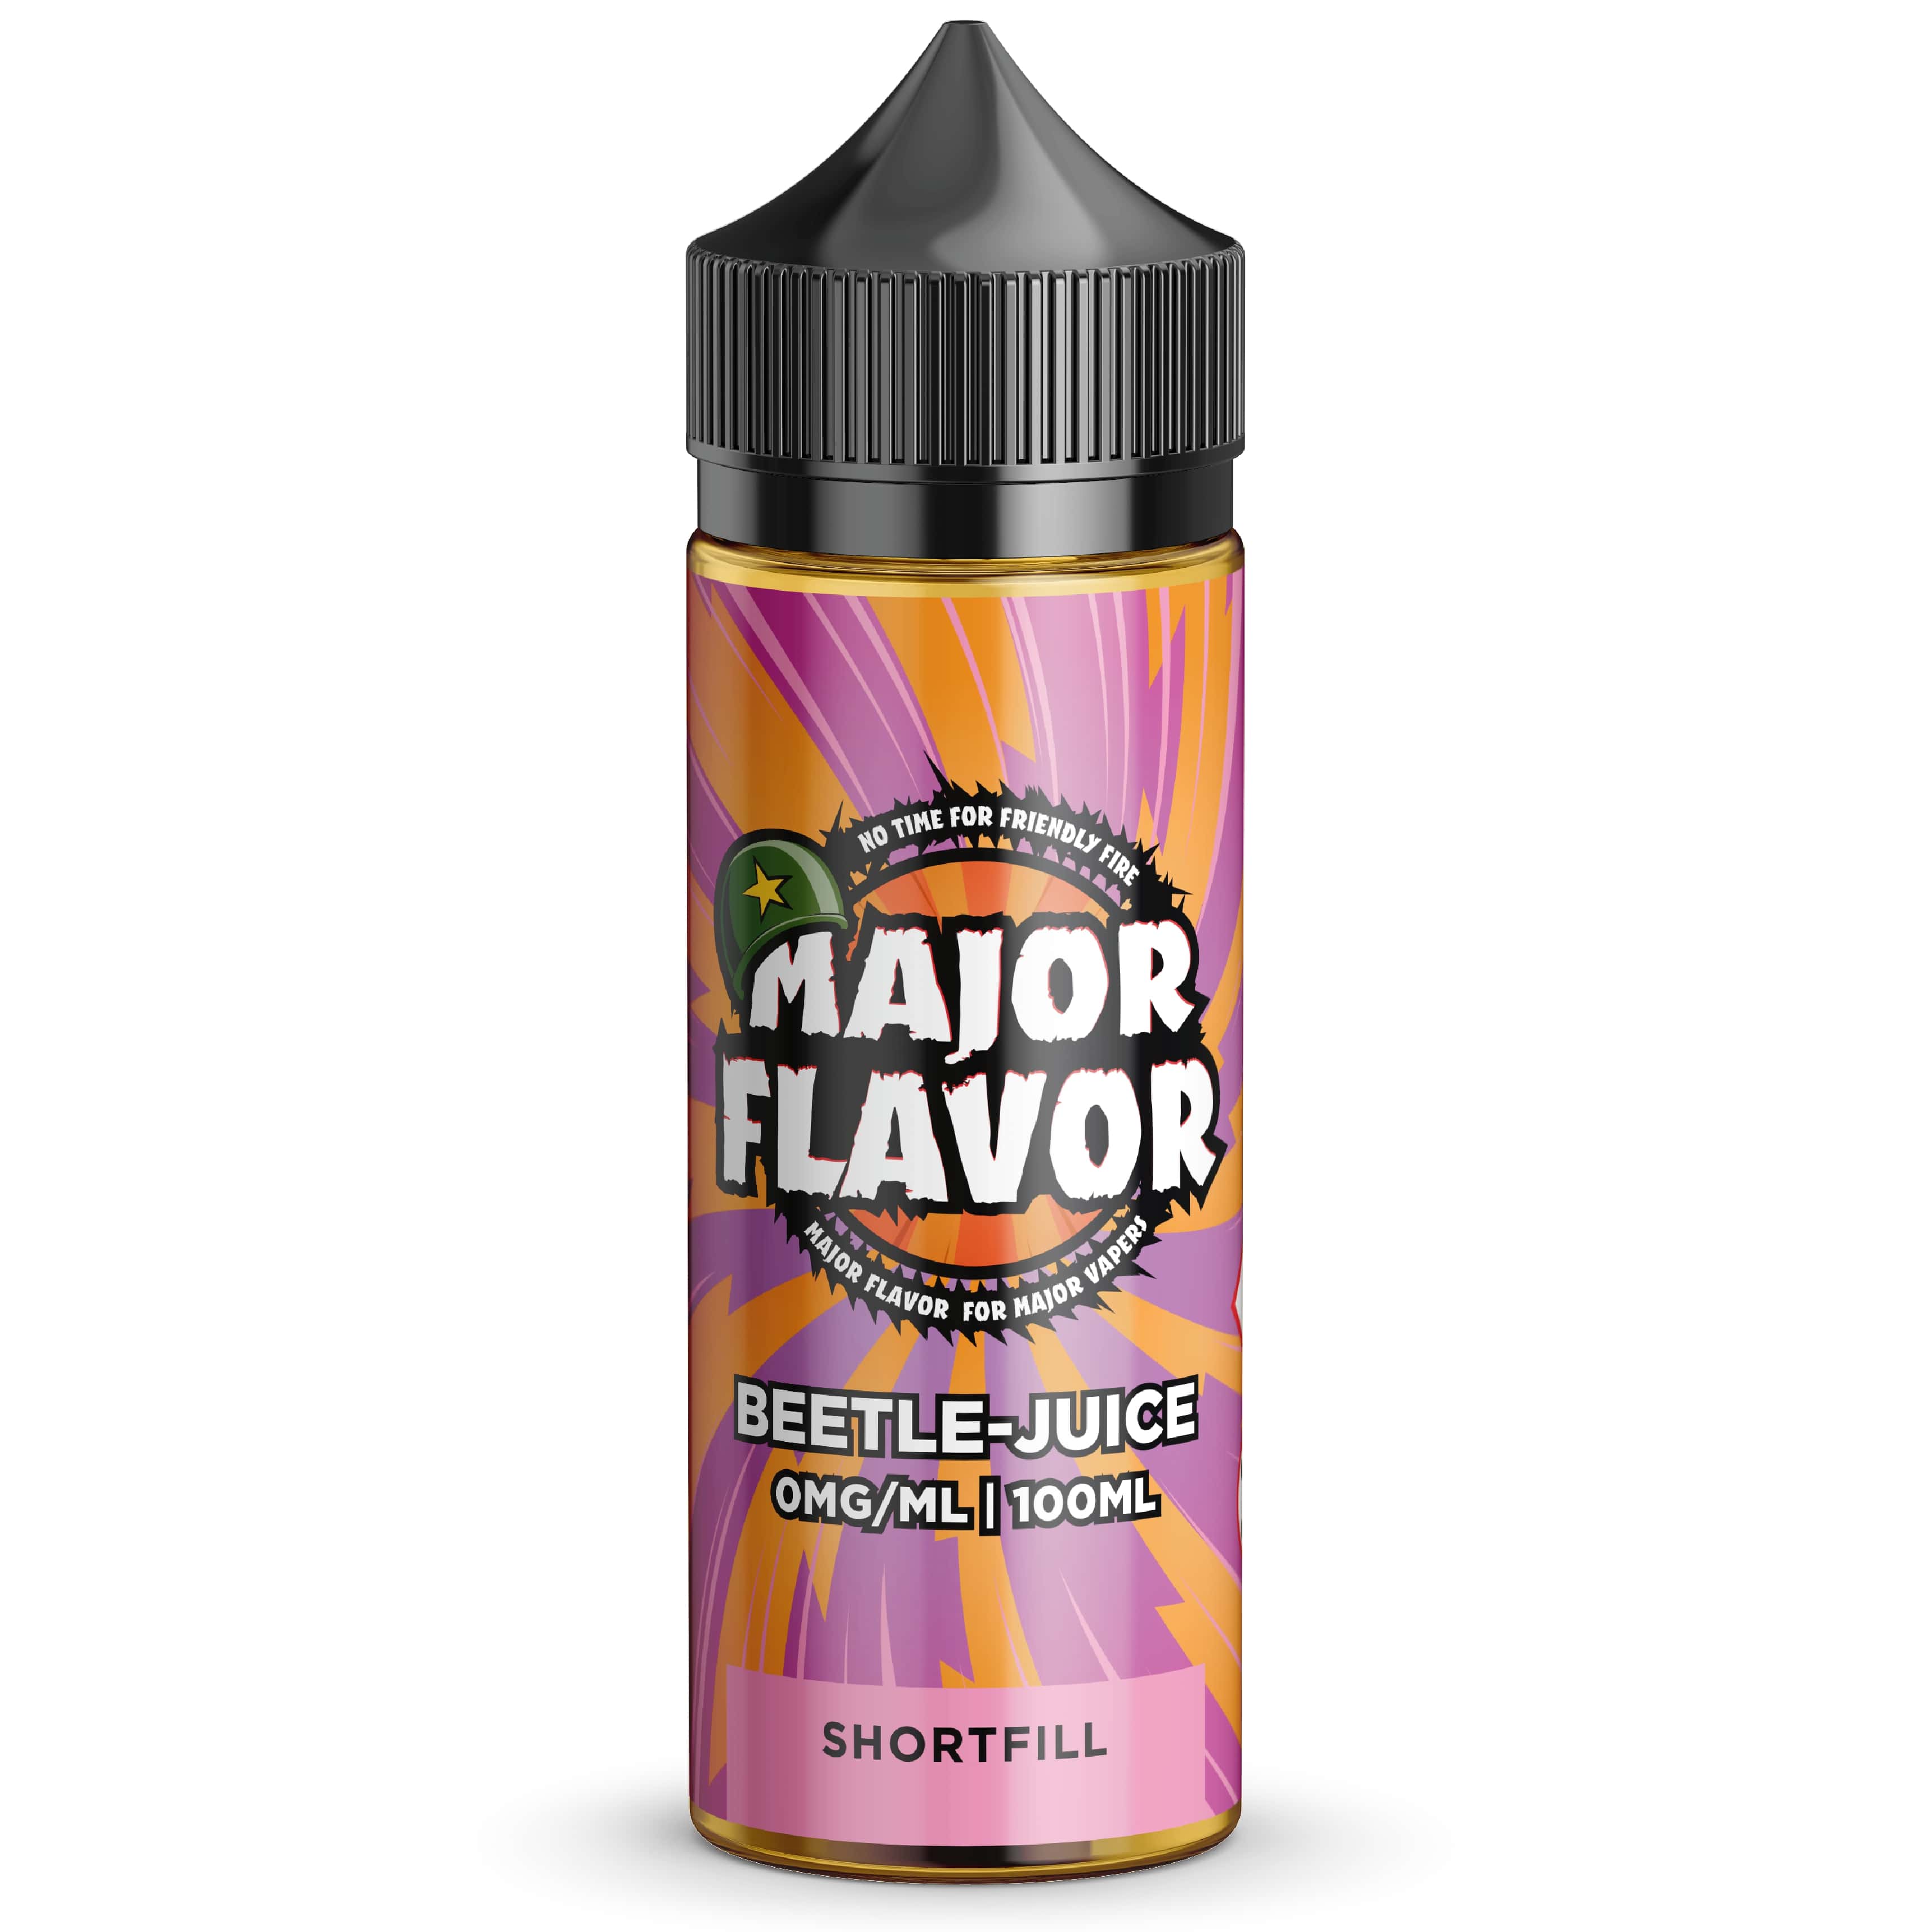 Major Flavor Beetle-Juice E-Liquid 100ml Shortfill